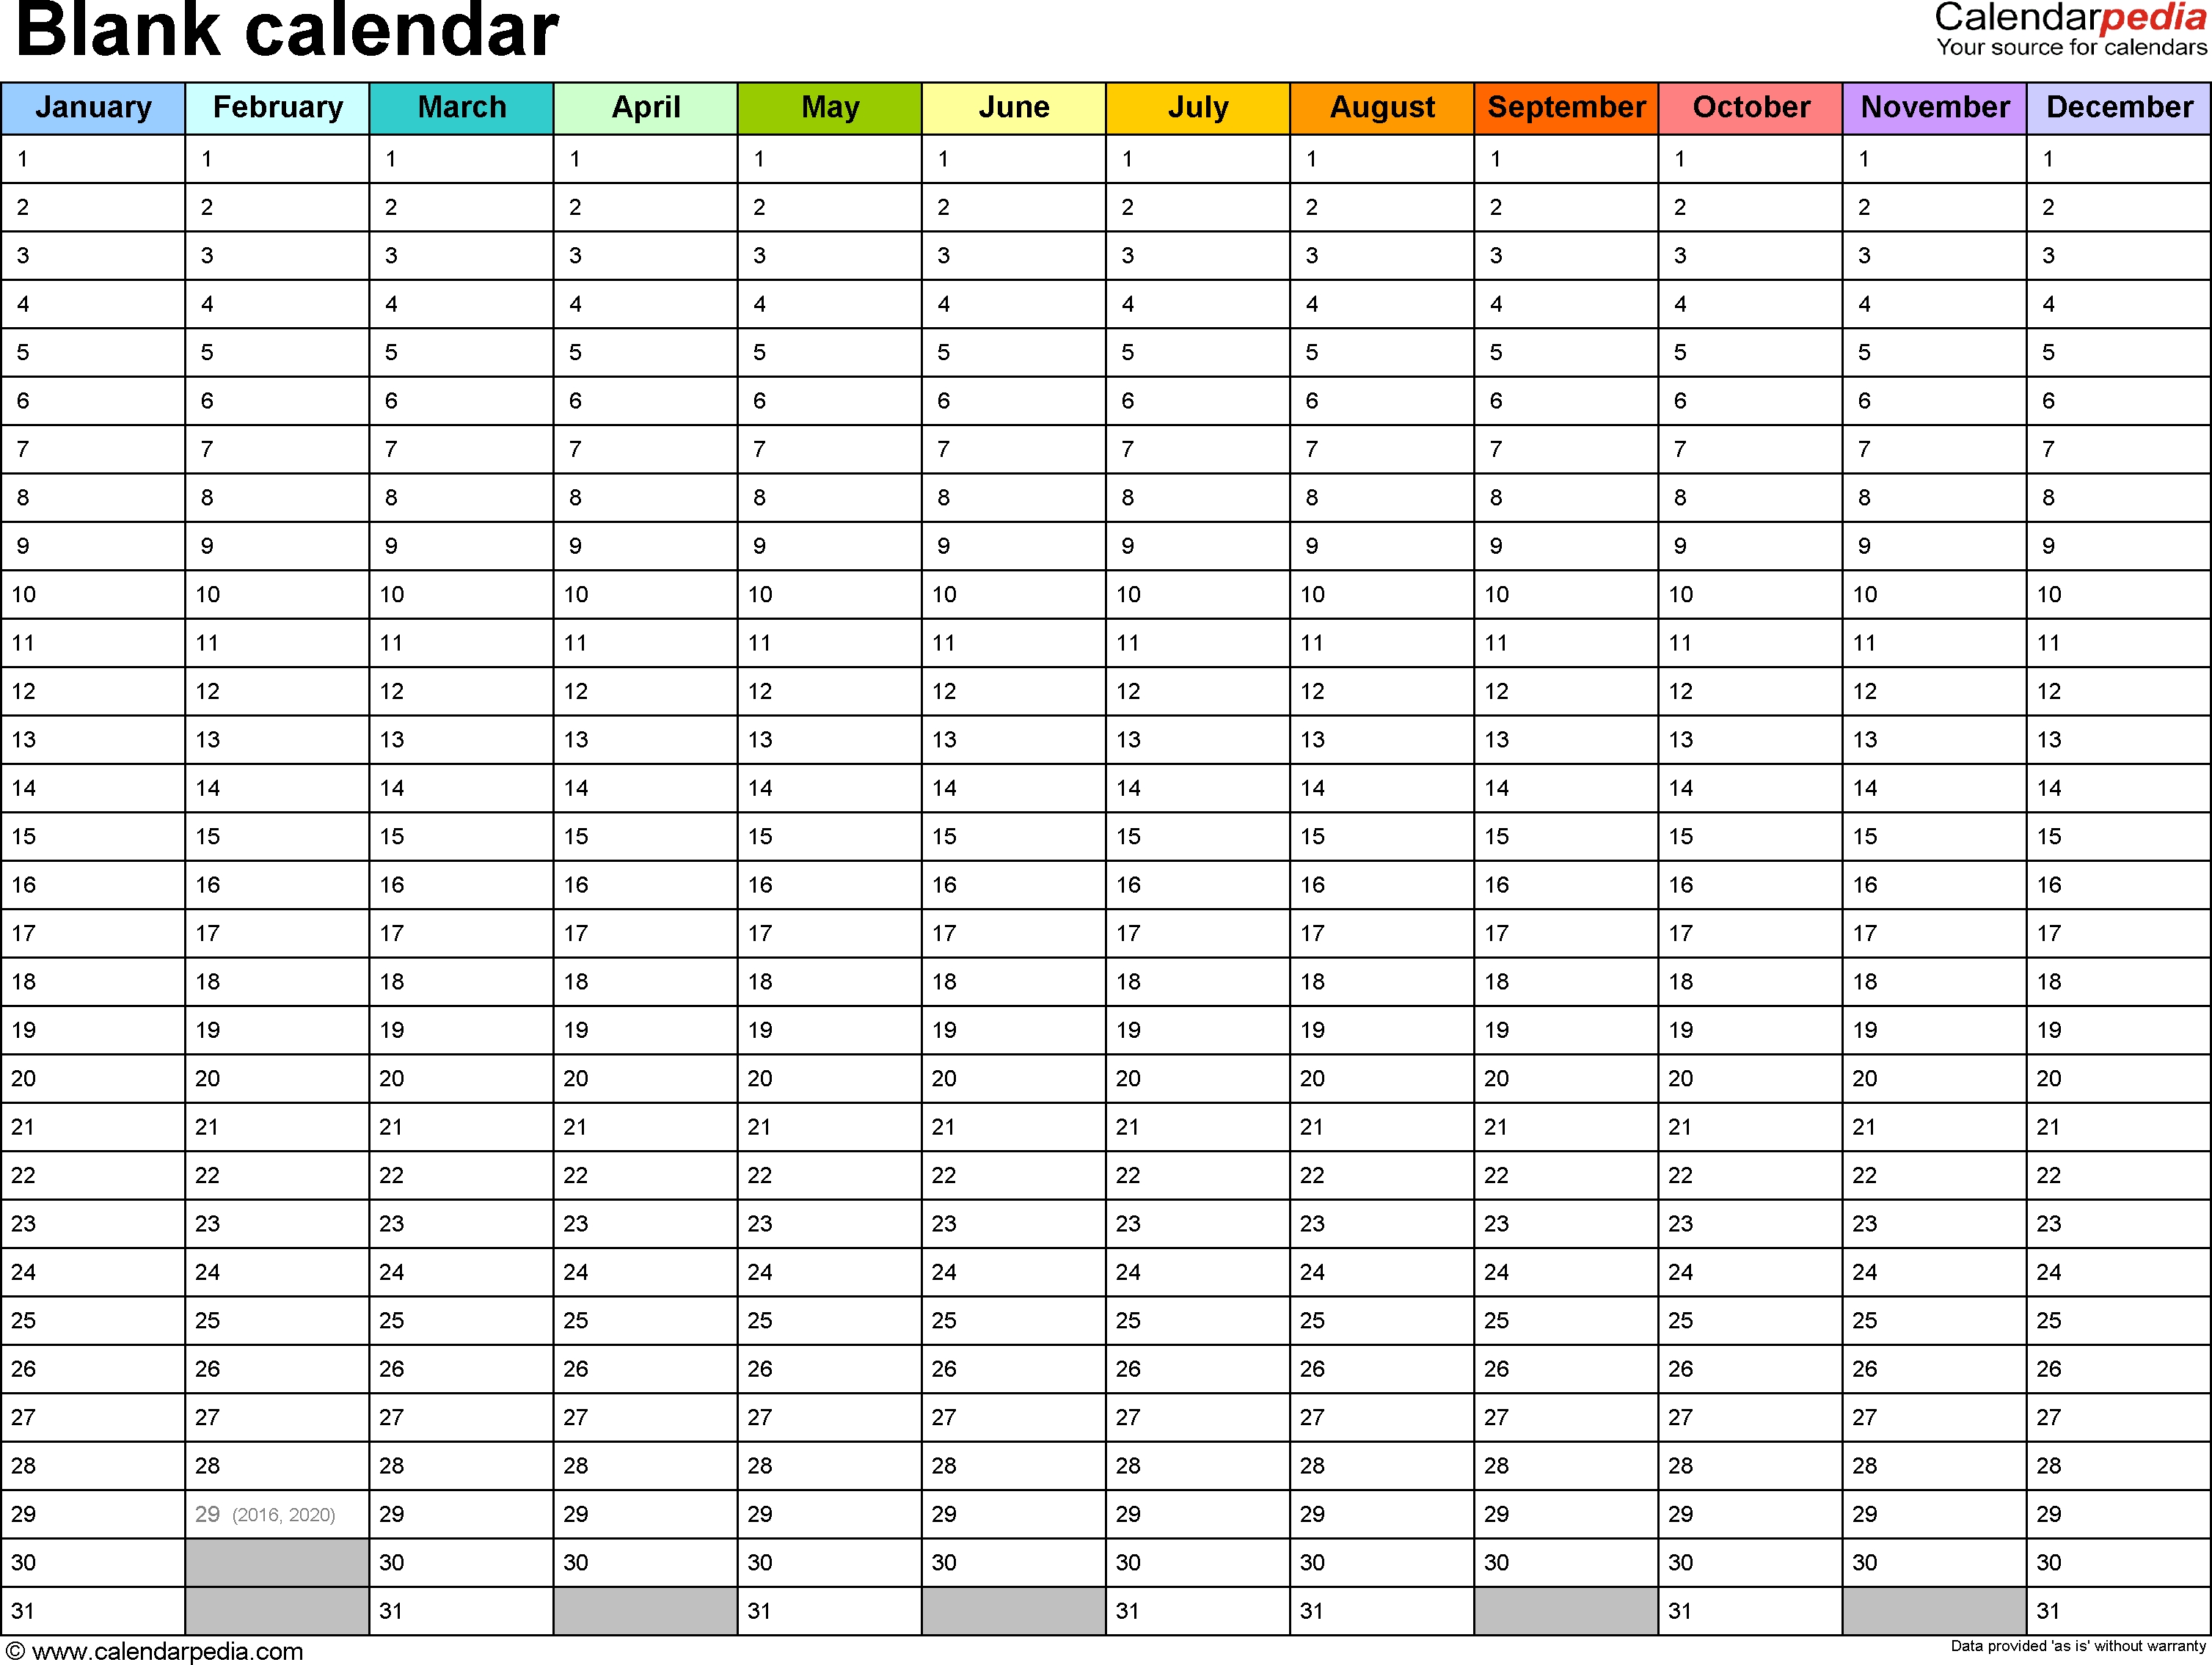 Blank Calendar - 9 Free Printable Microsoft Word Templates Calendar By Month Template